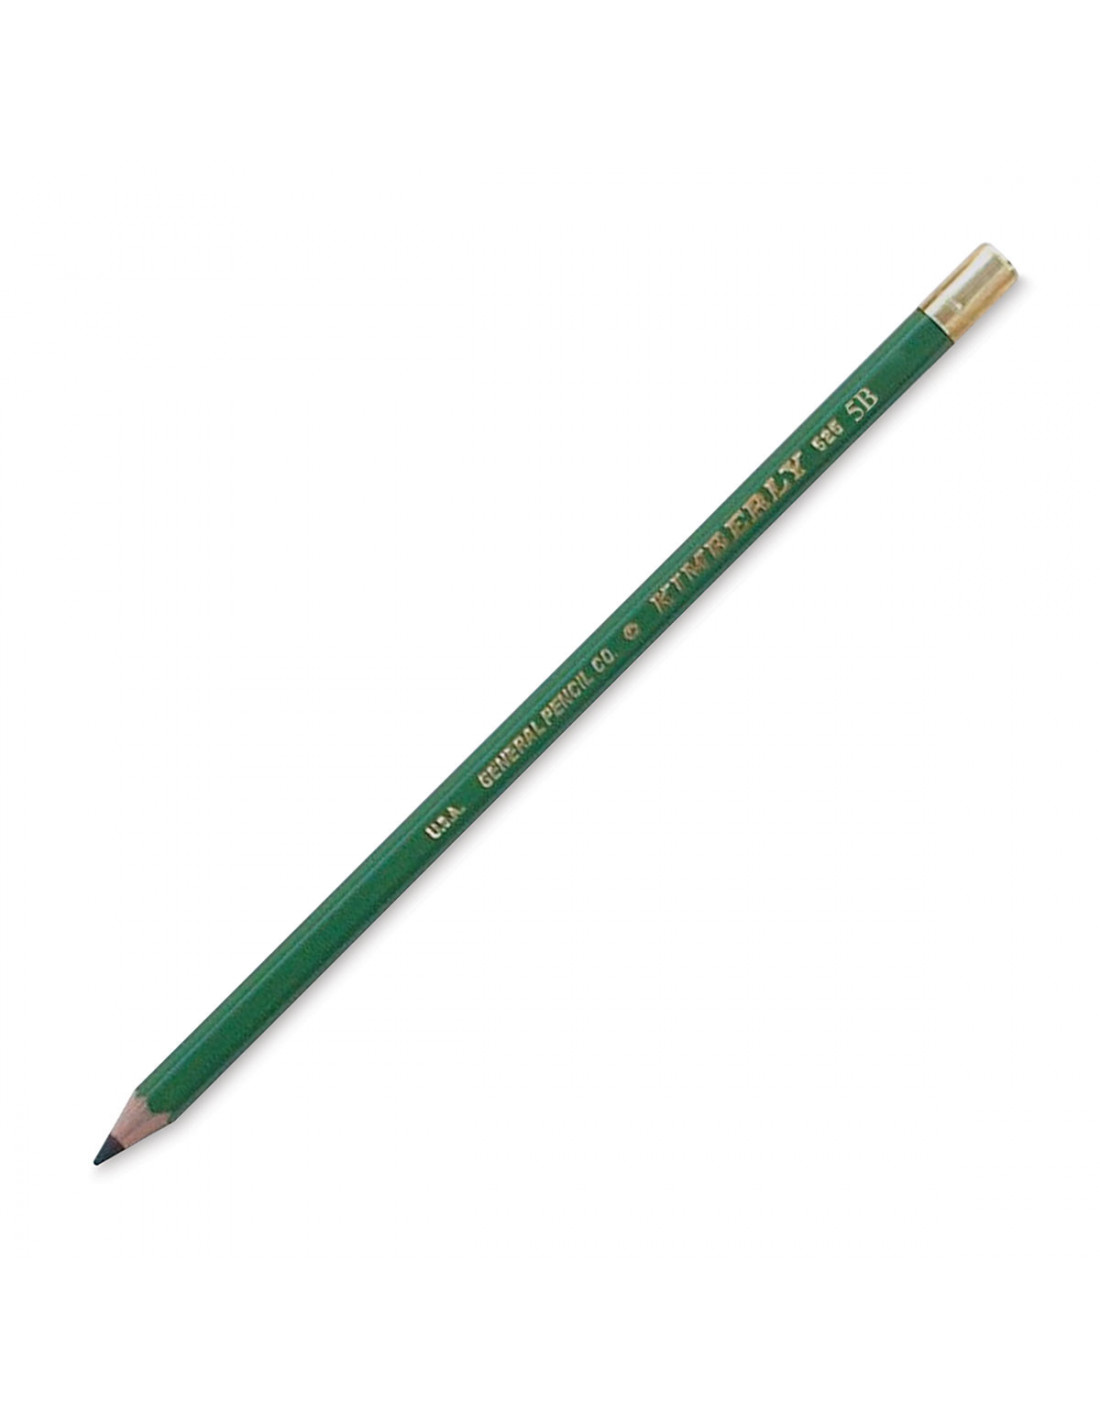 Crayon graphite 5B - Kimberly 525 - General Pencil Company